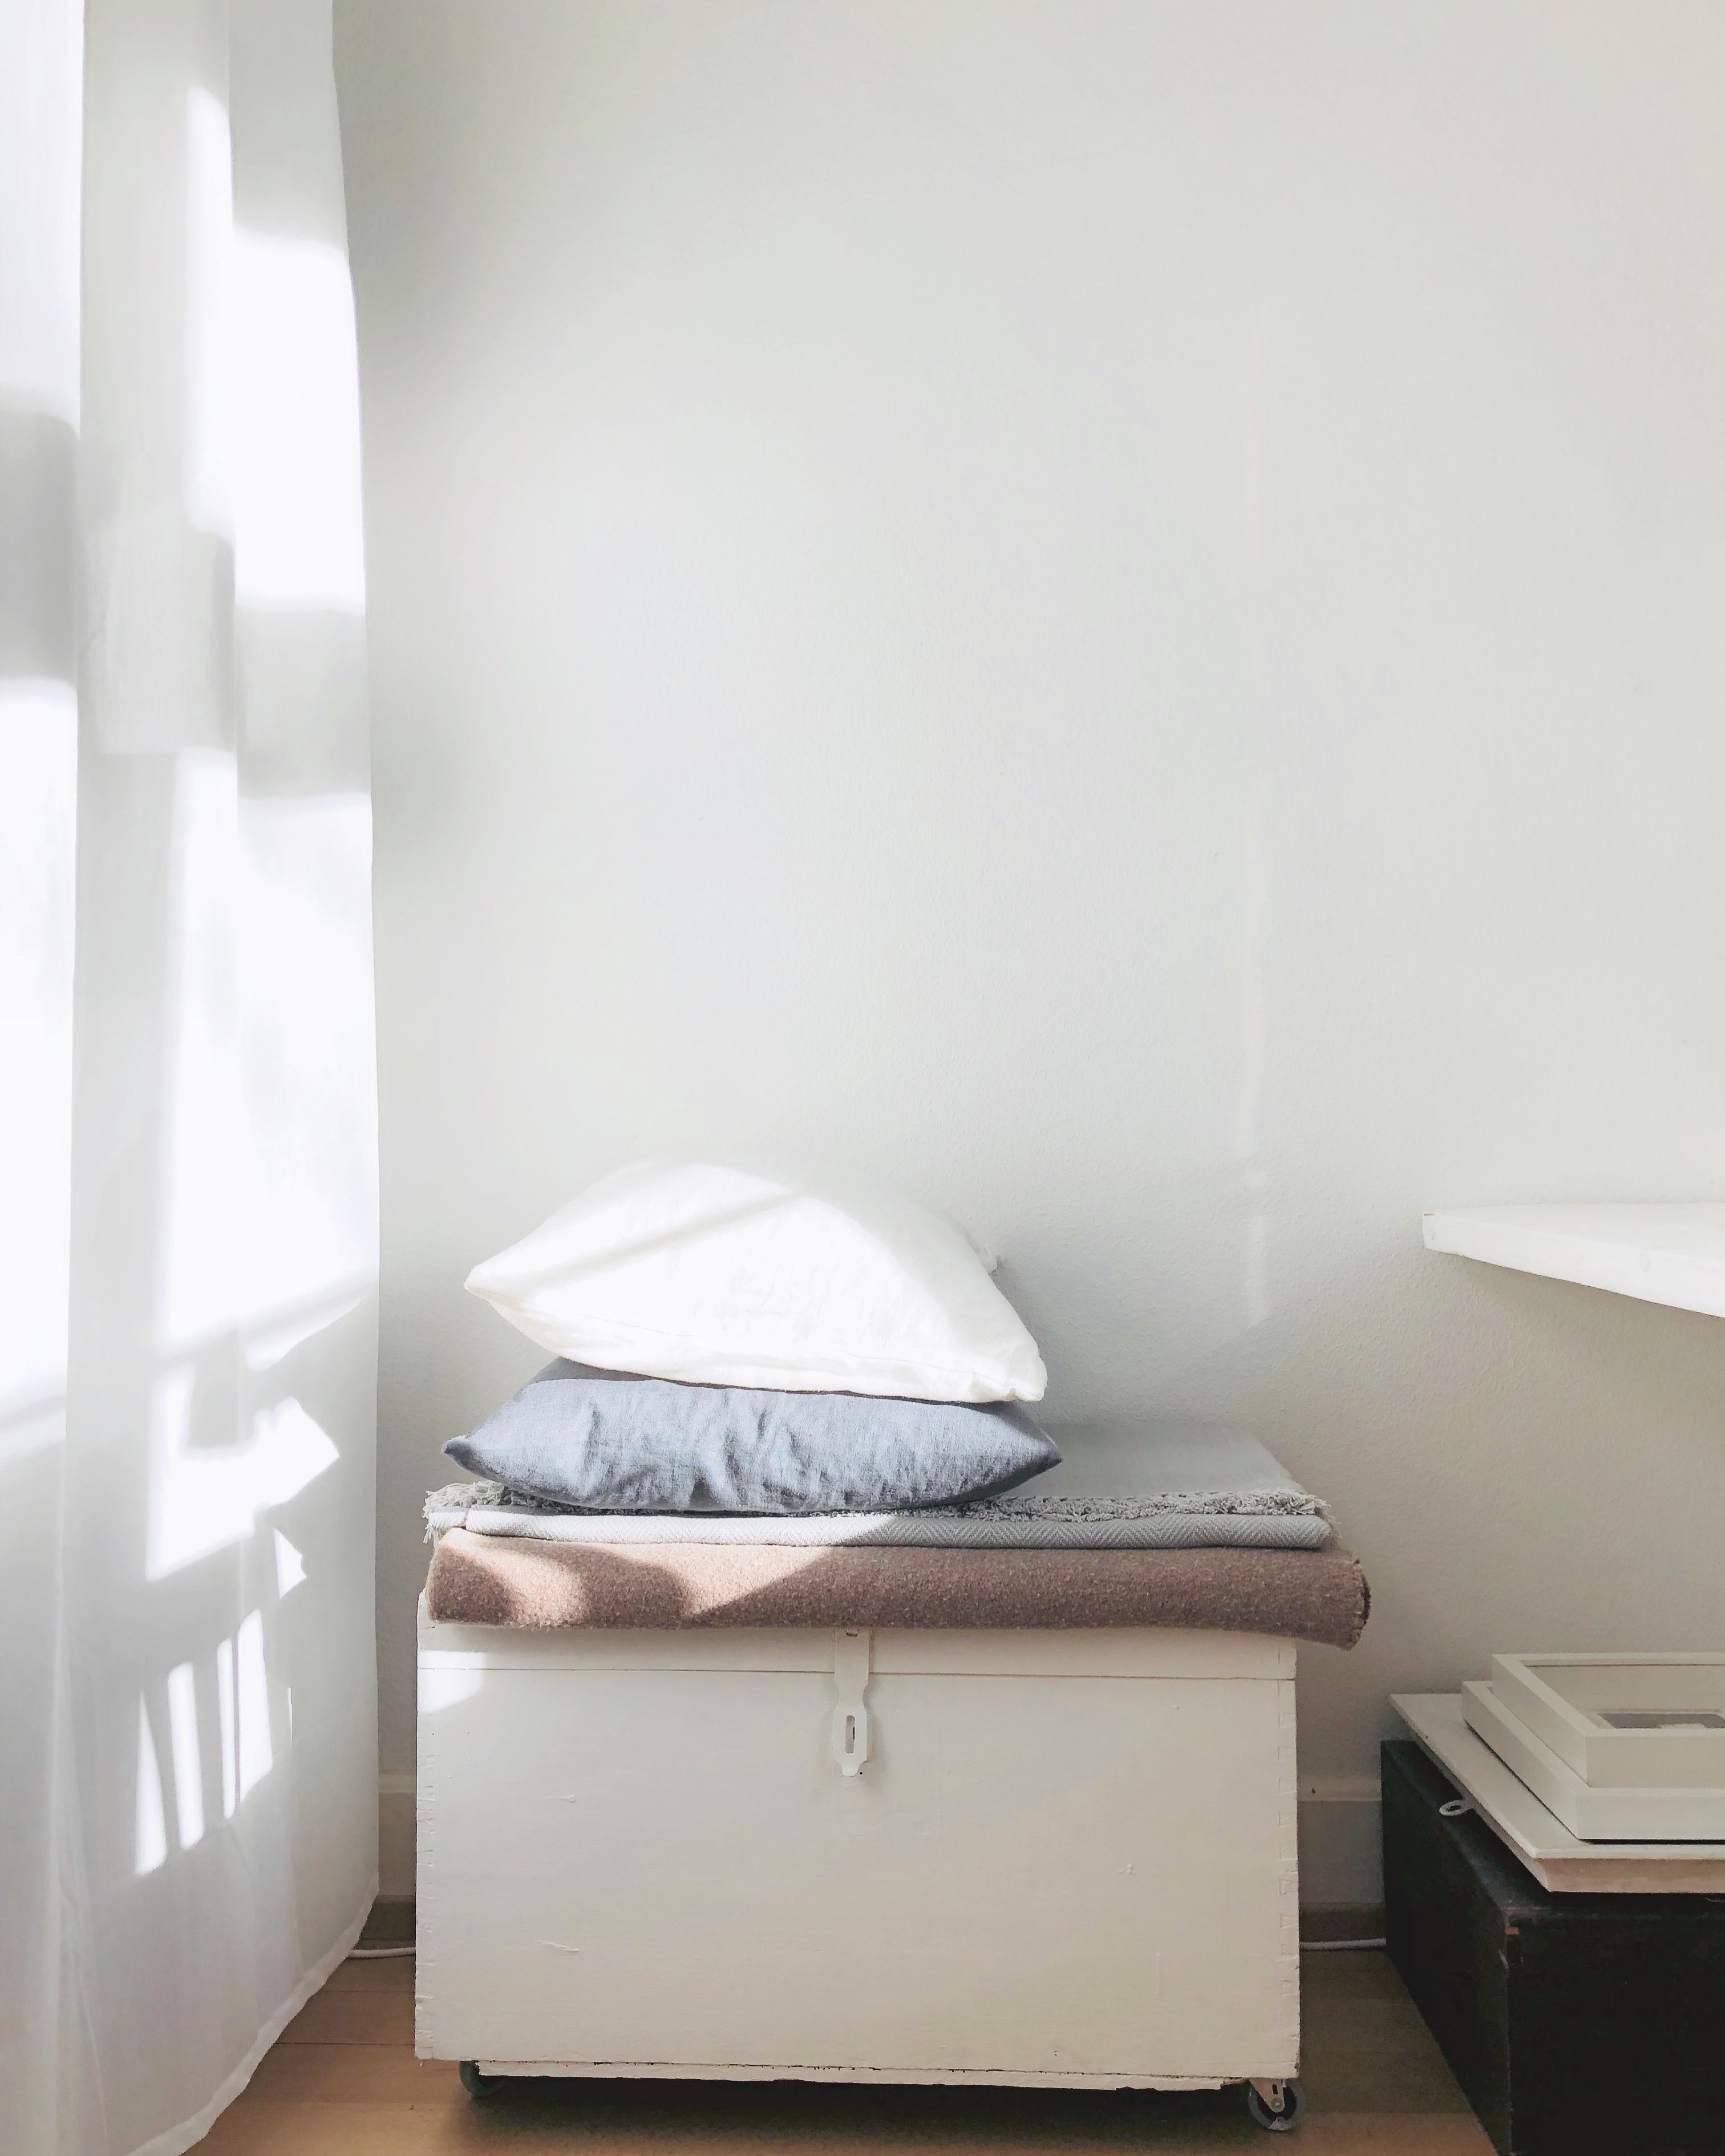 Eckenzauber #details #interiordesign #sunshine #pillowlove #whiteliving #scandinavianstyle #bedroom